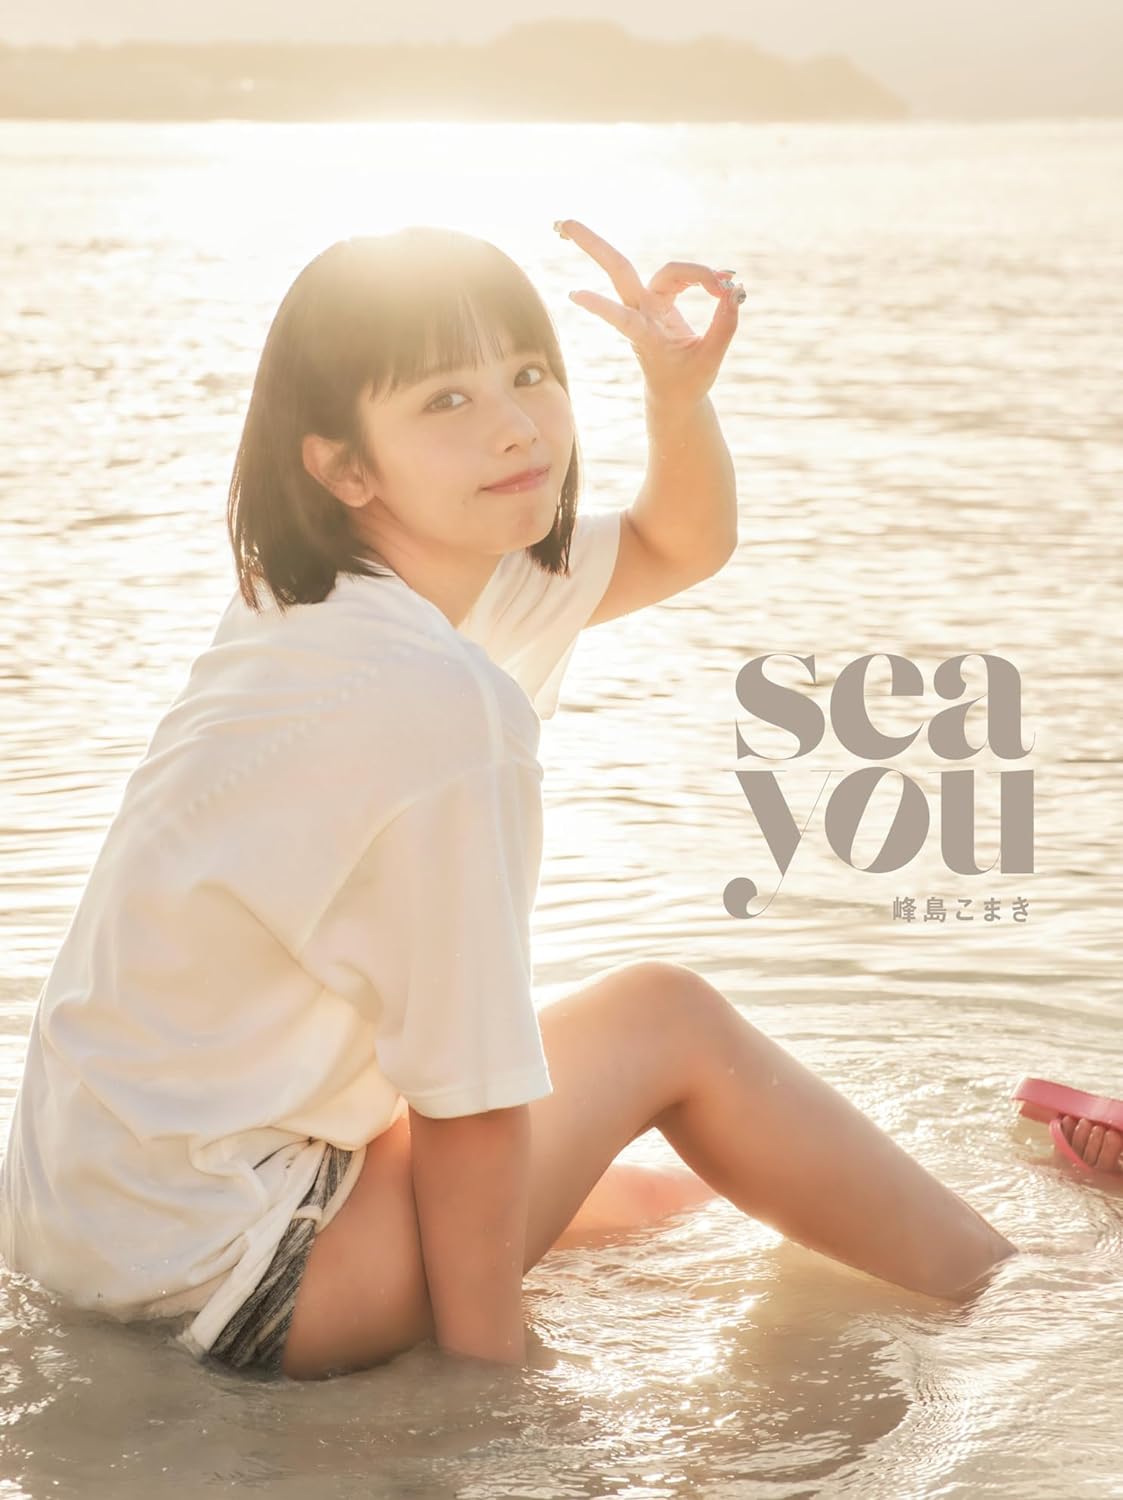 Komaki Mineshima Photo Book "sea you" / 7land